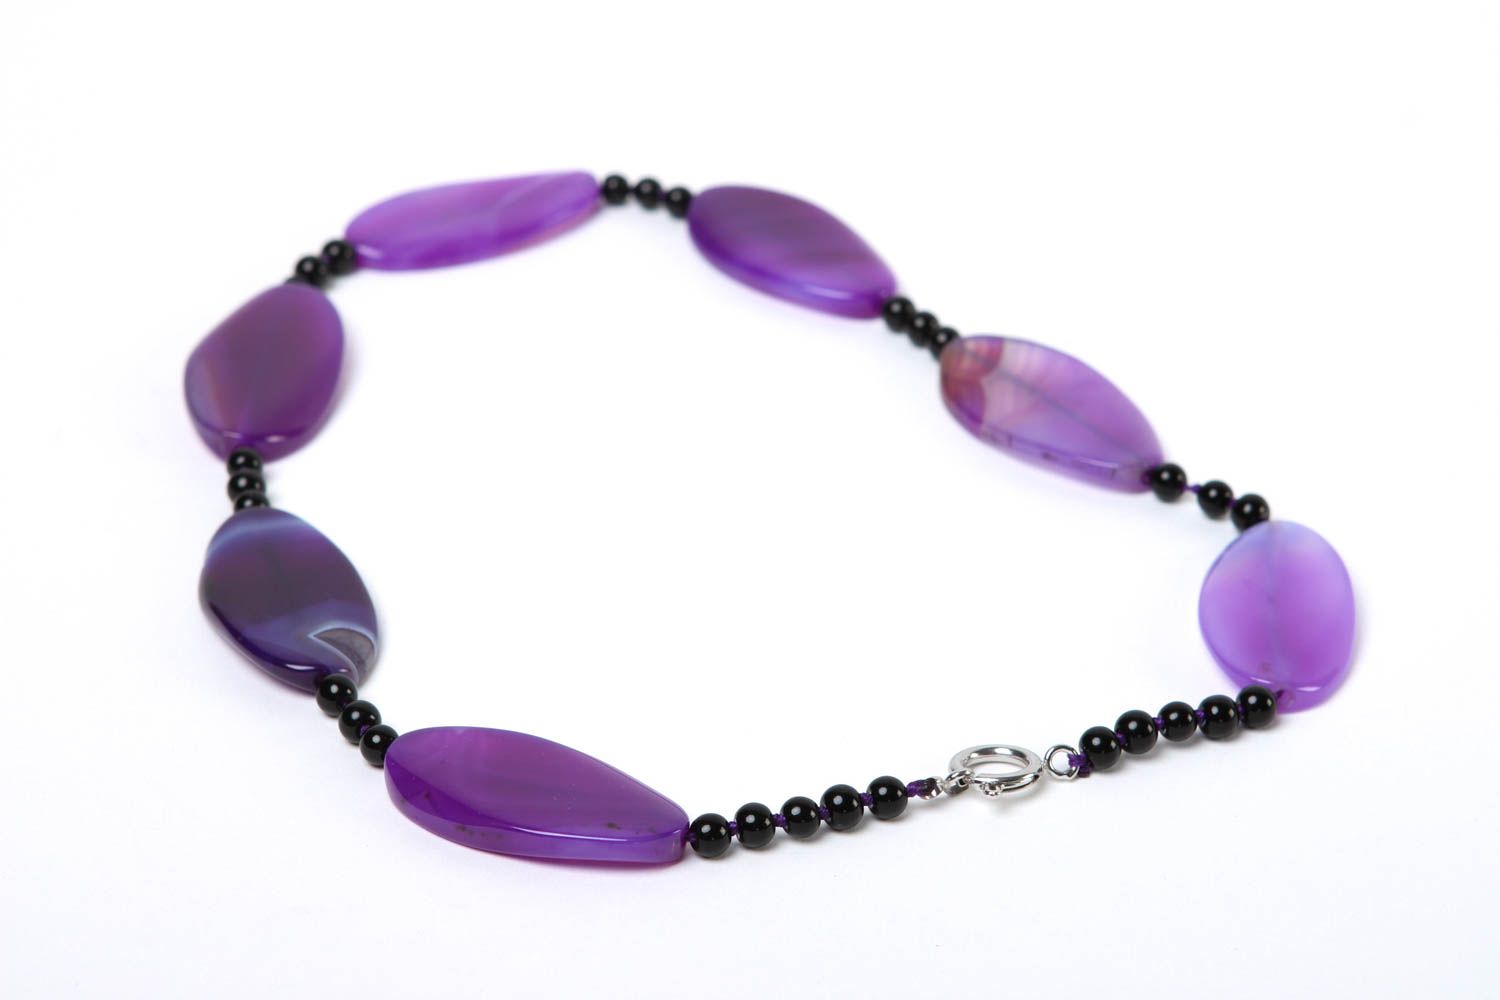 Handmade necklace designer accessory unusual bead necklace gift ideas photo 4